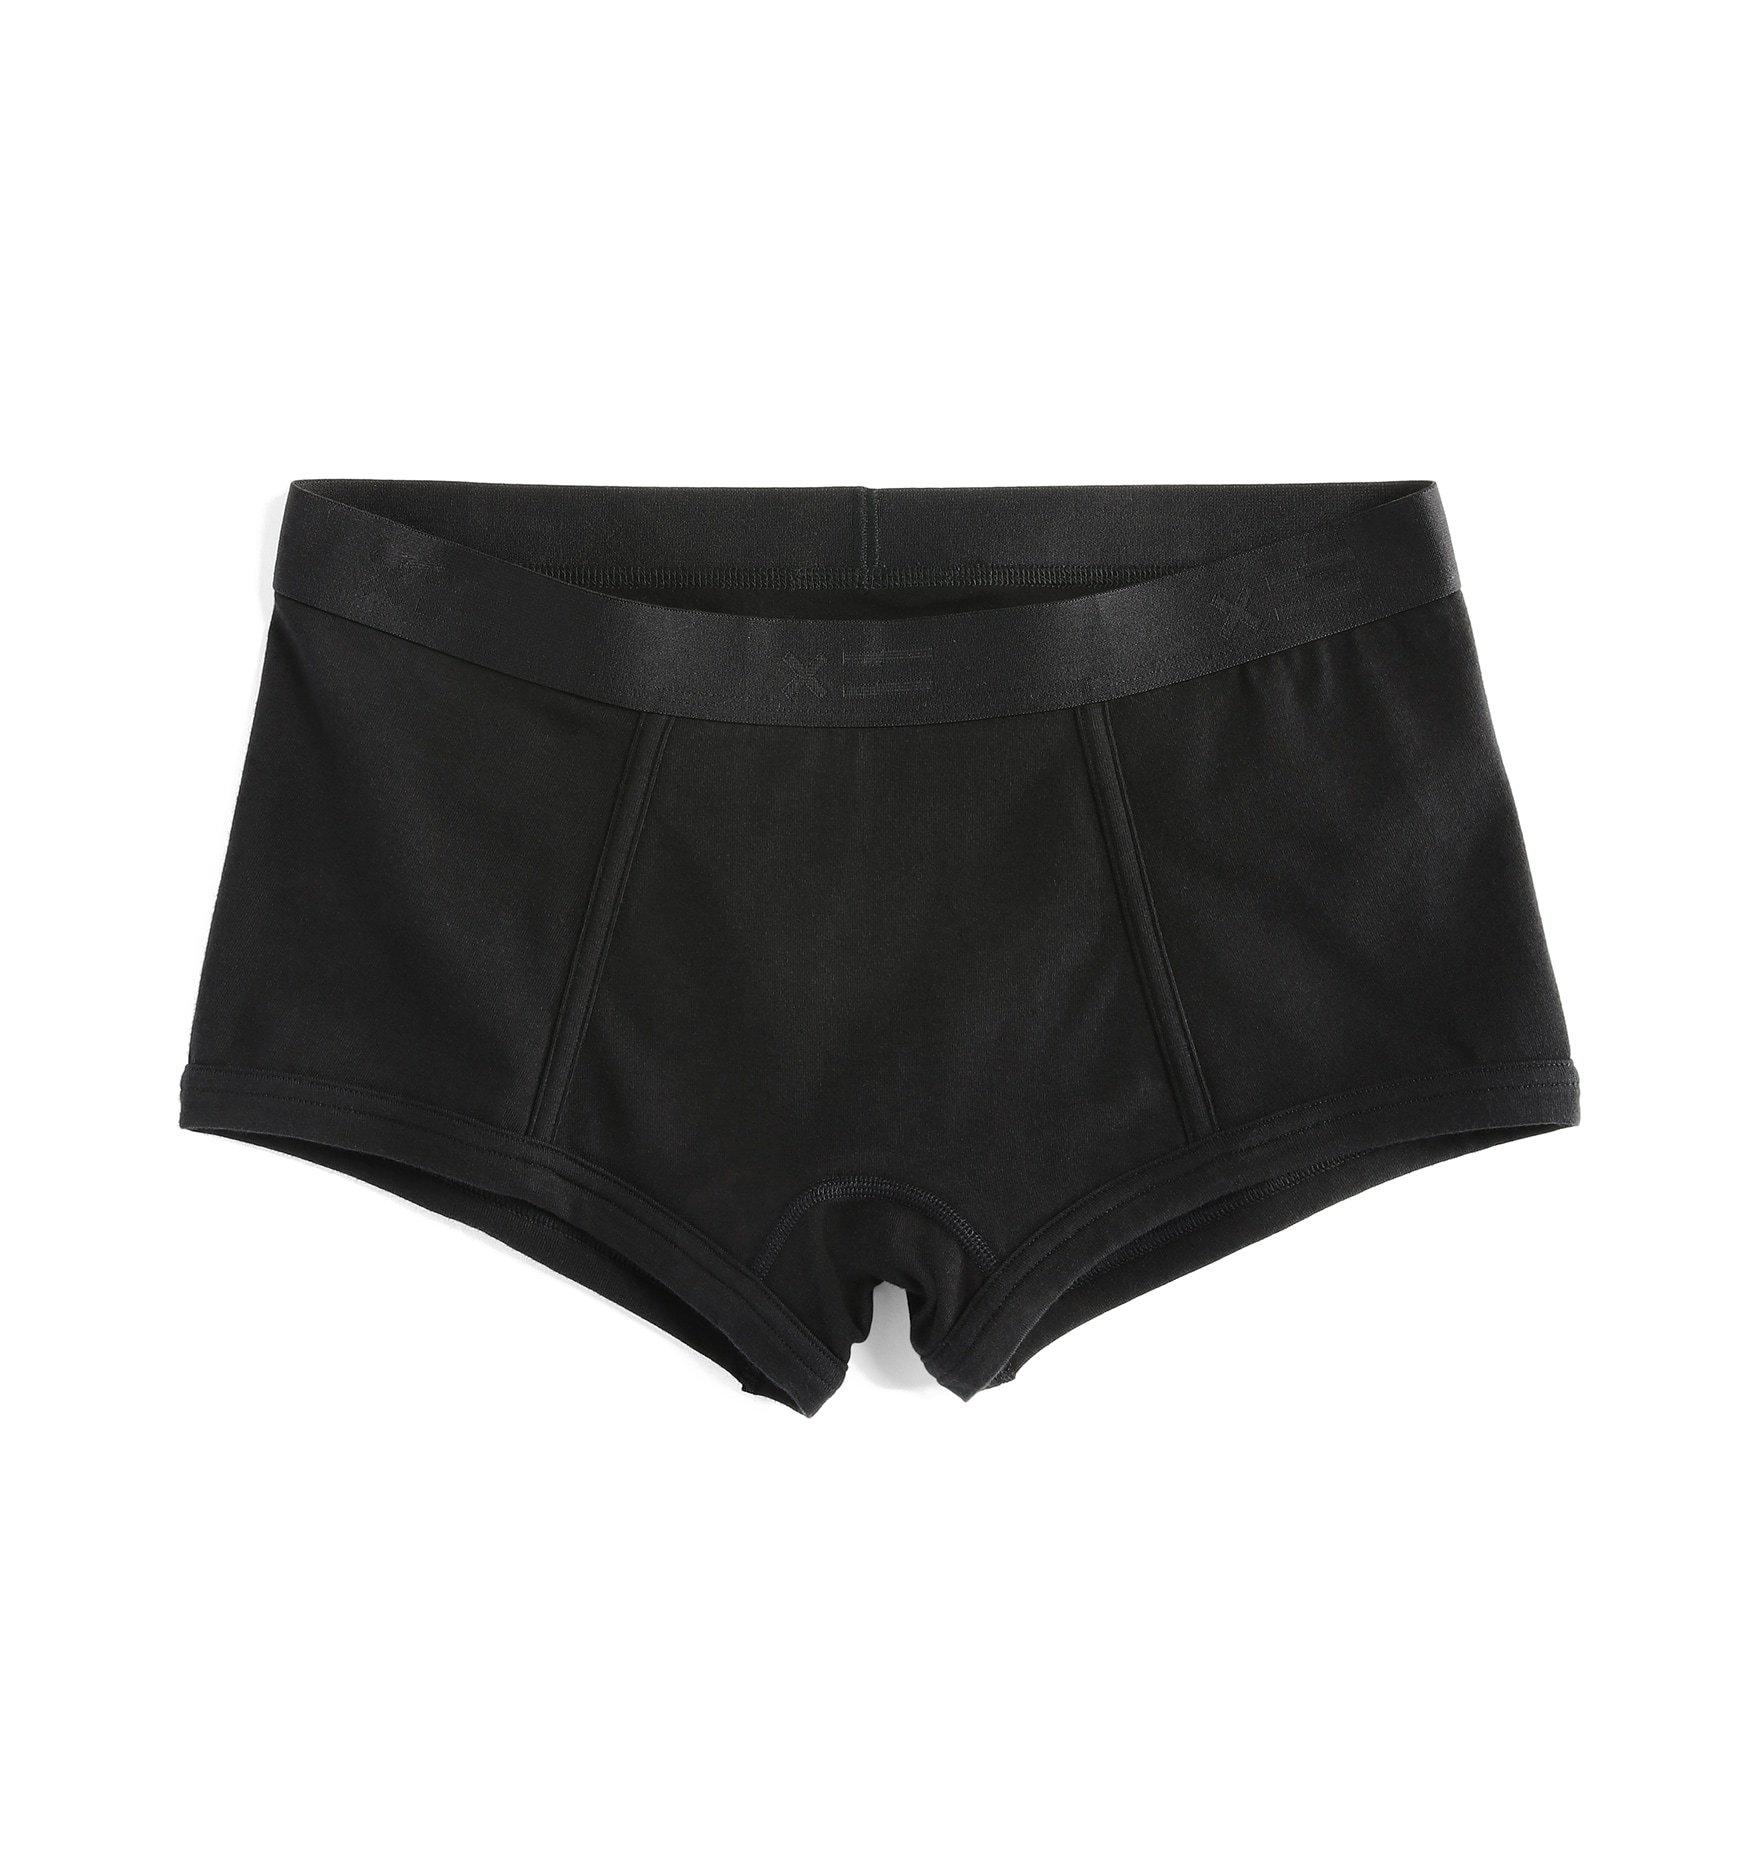 Boy Shorts Underwear for Any Body, X= Black – TomboyX